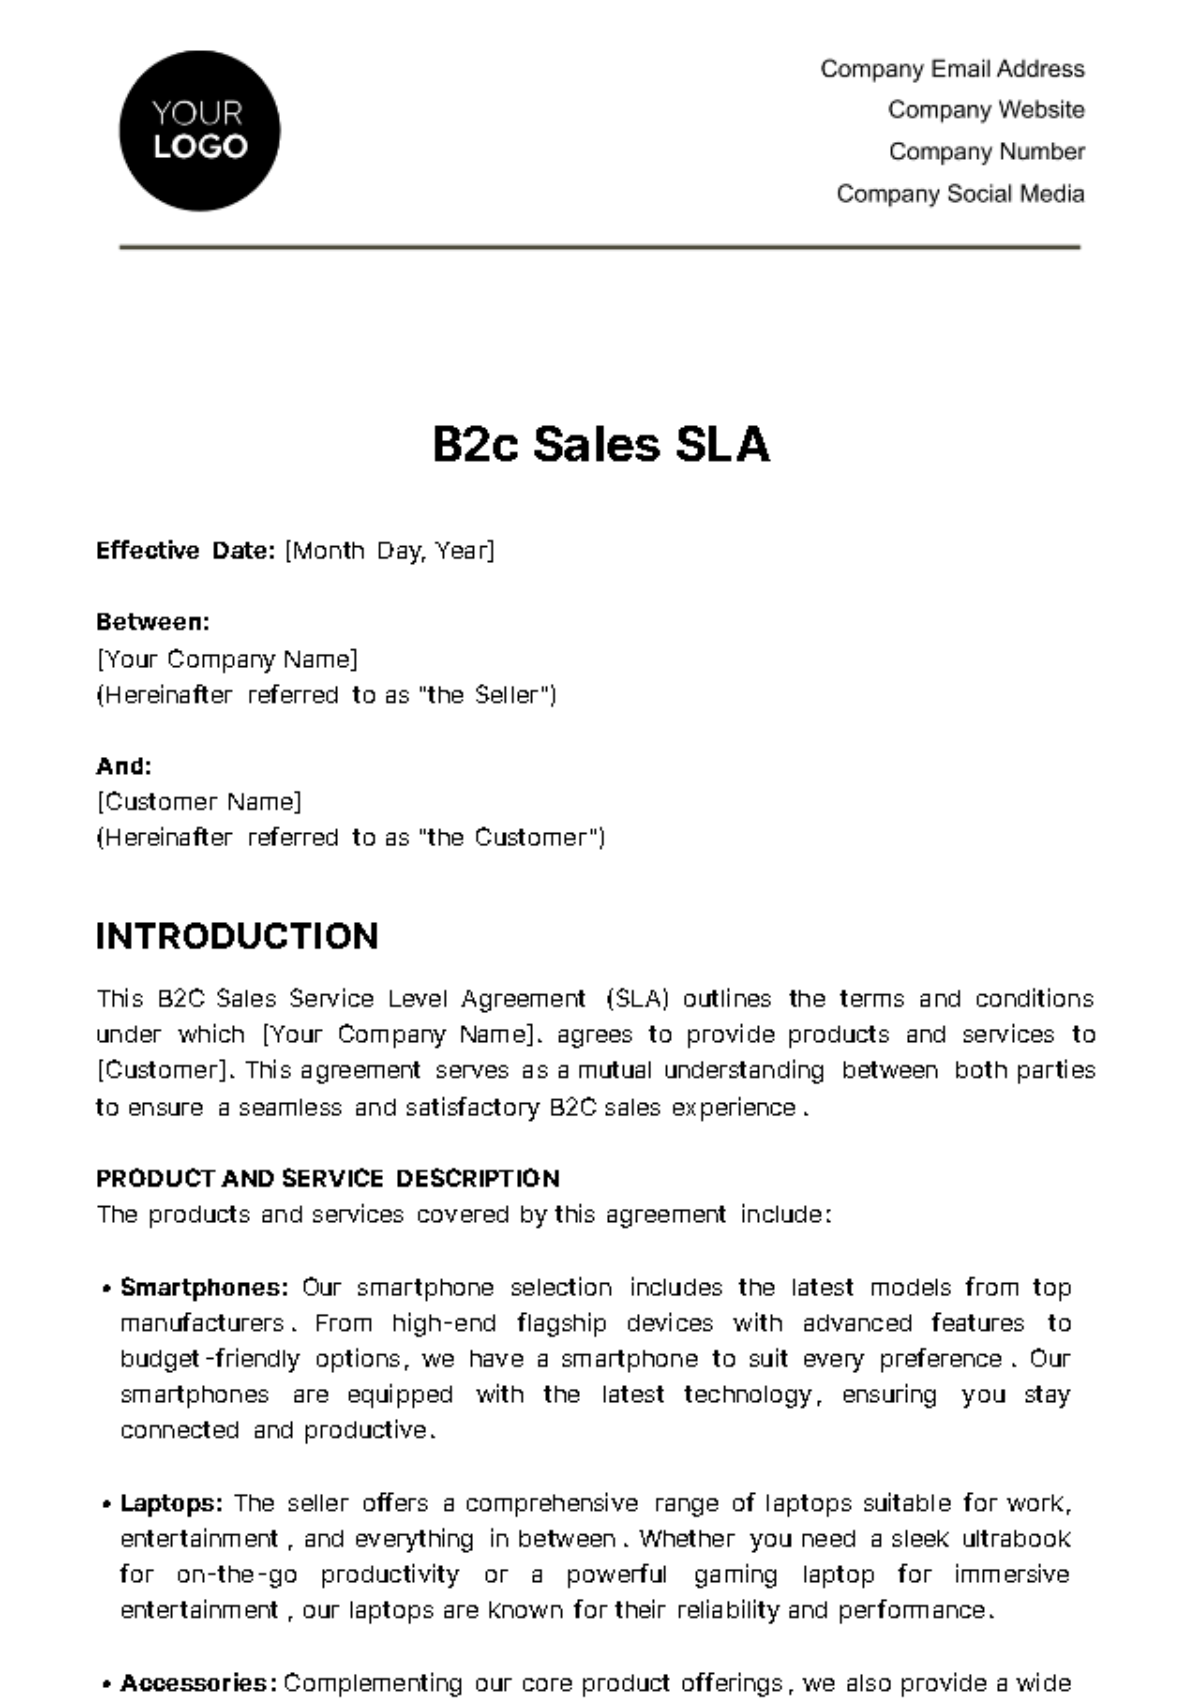 Free B2C Sales SLA Template